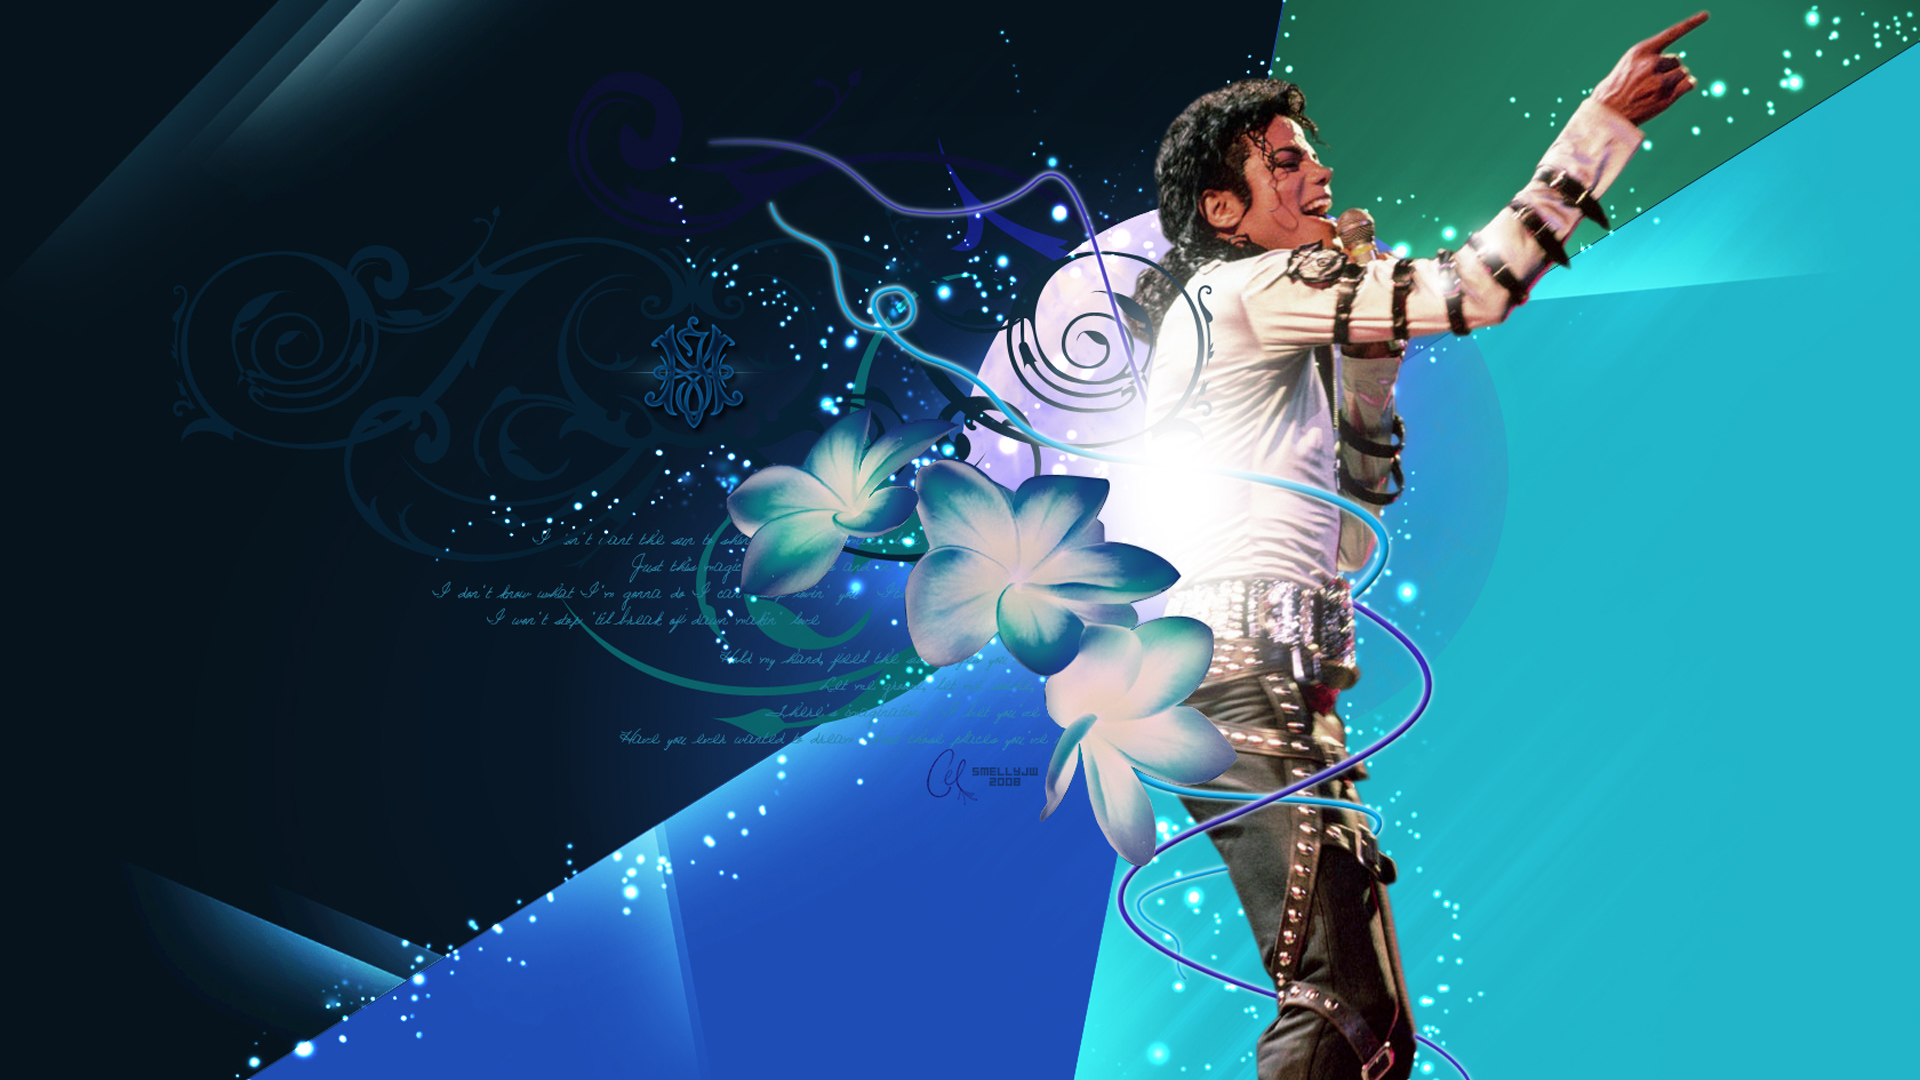 Michael Jackson wallpapers free Michael Jackson wallpaper download